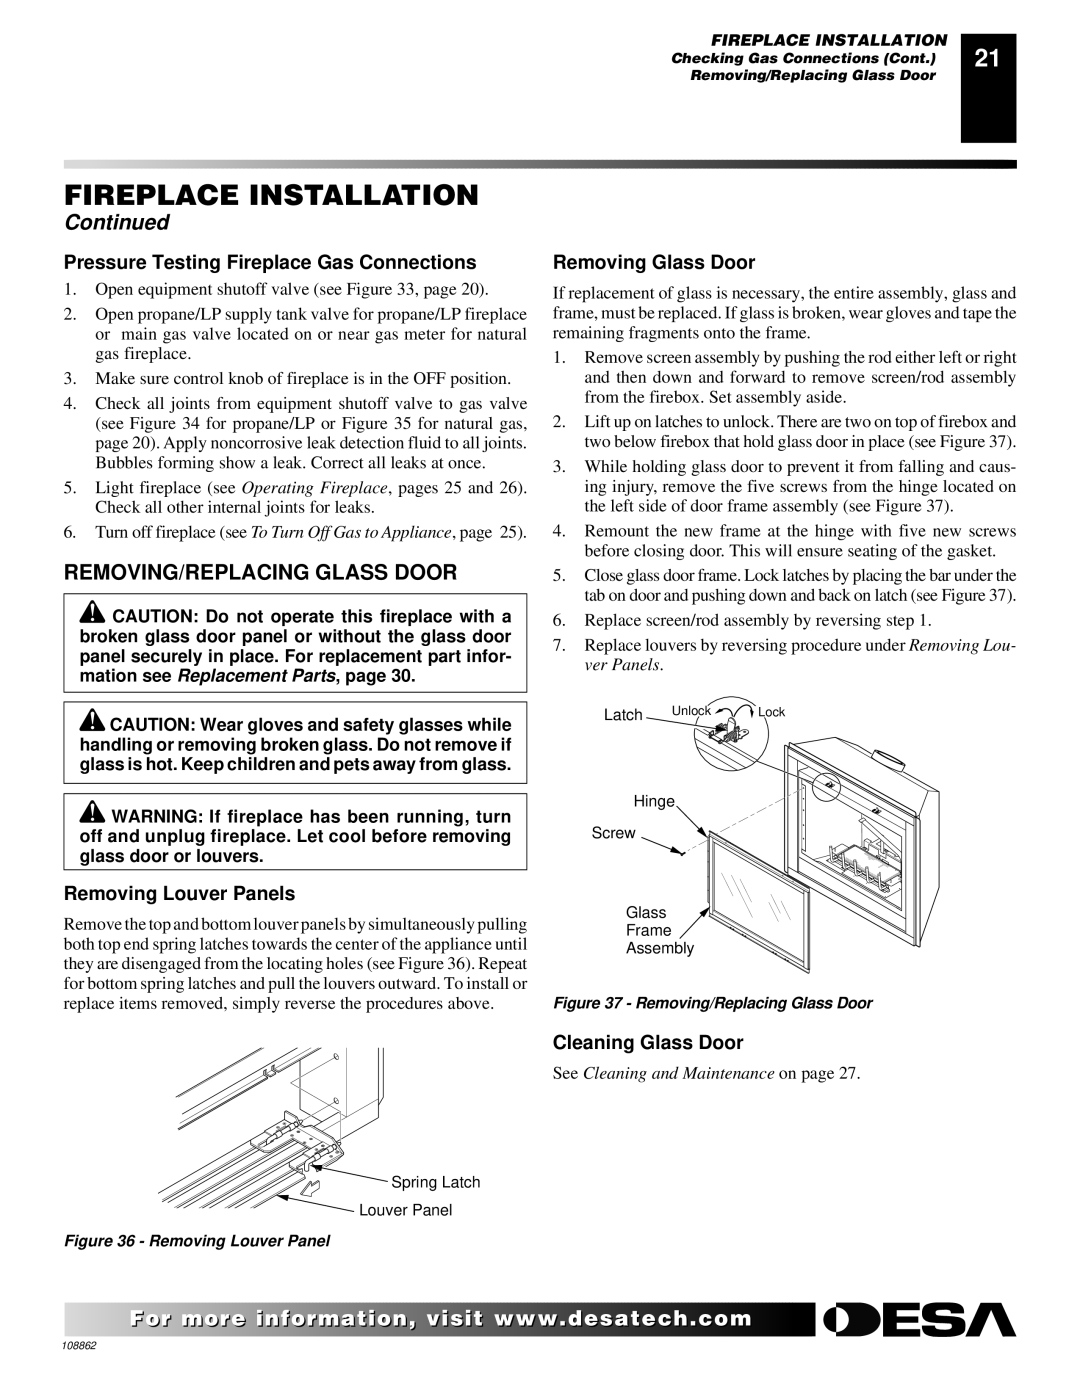 Desa (V)V36EN REMOVING/REPLACING Glass Door, Pressure Testing Fireplace Gas Connections, Removing Louver Panels 